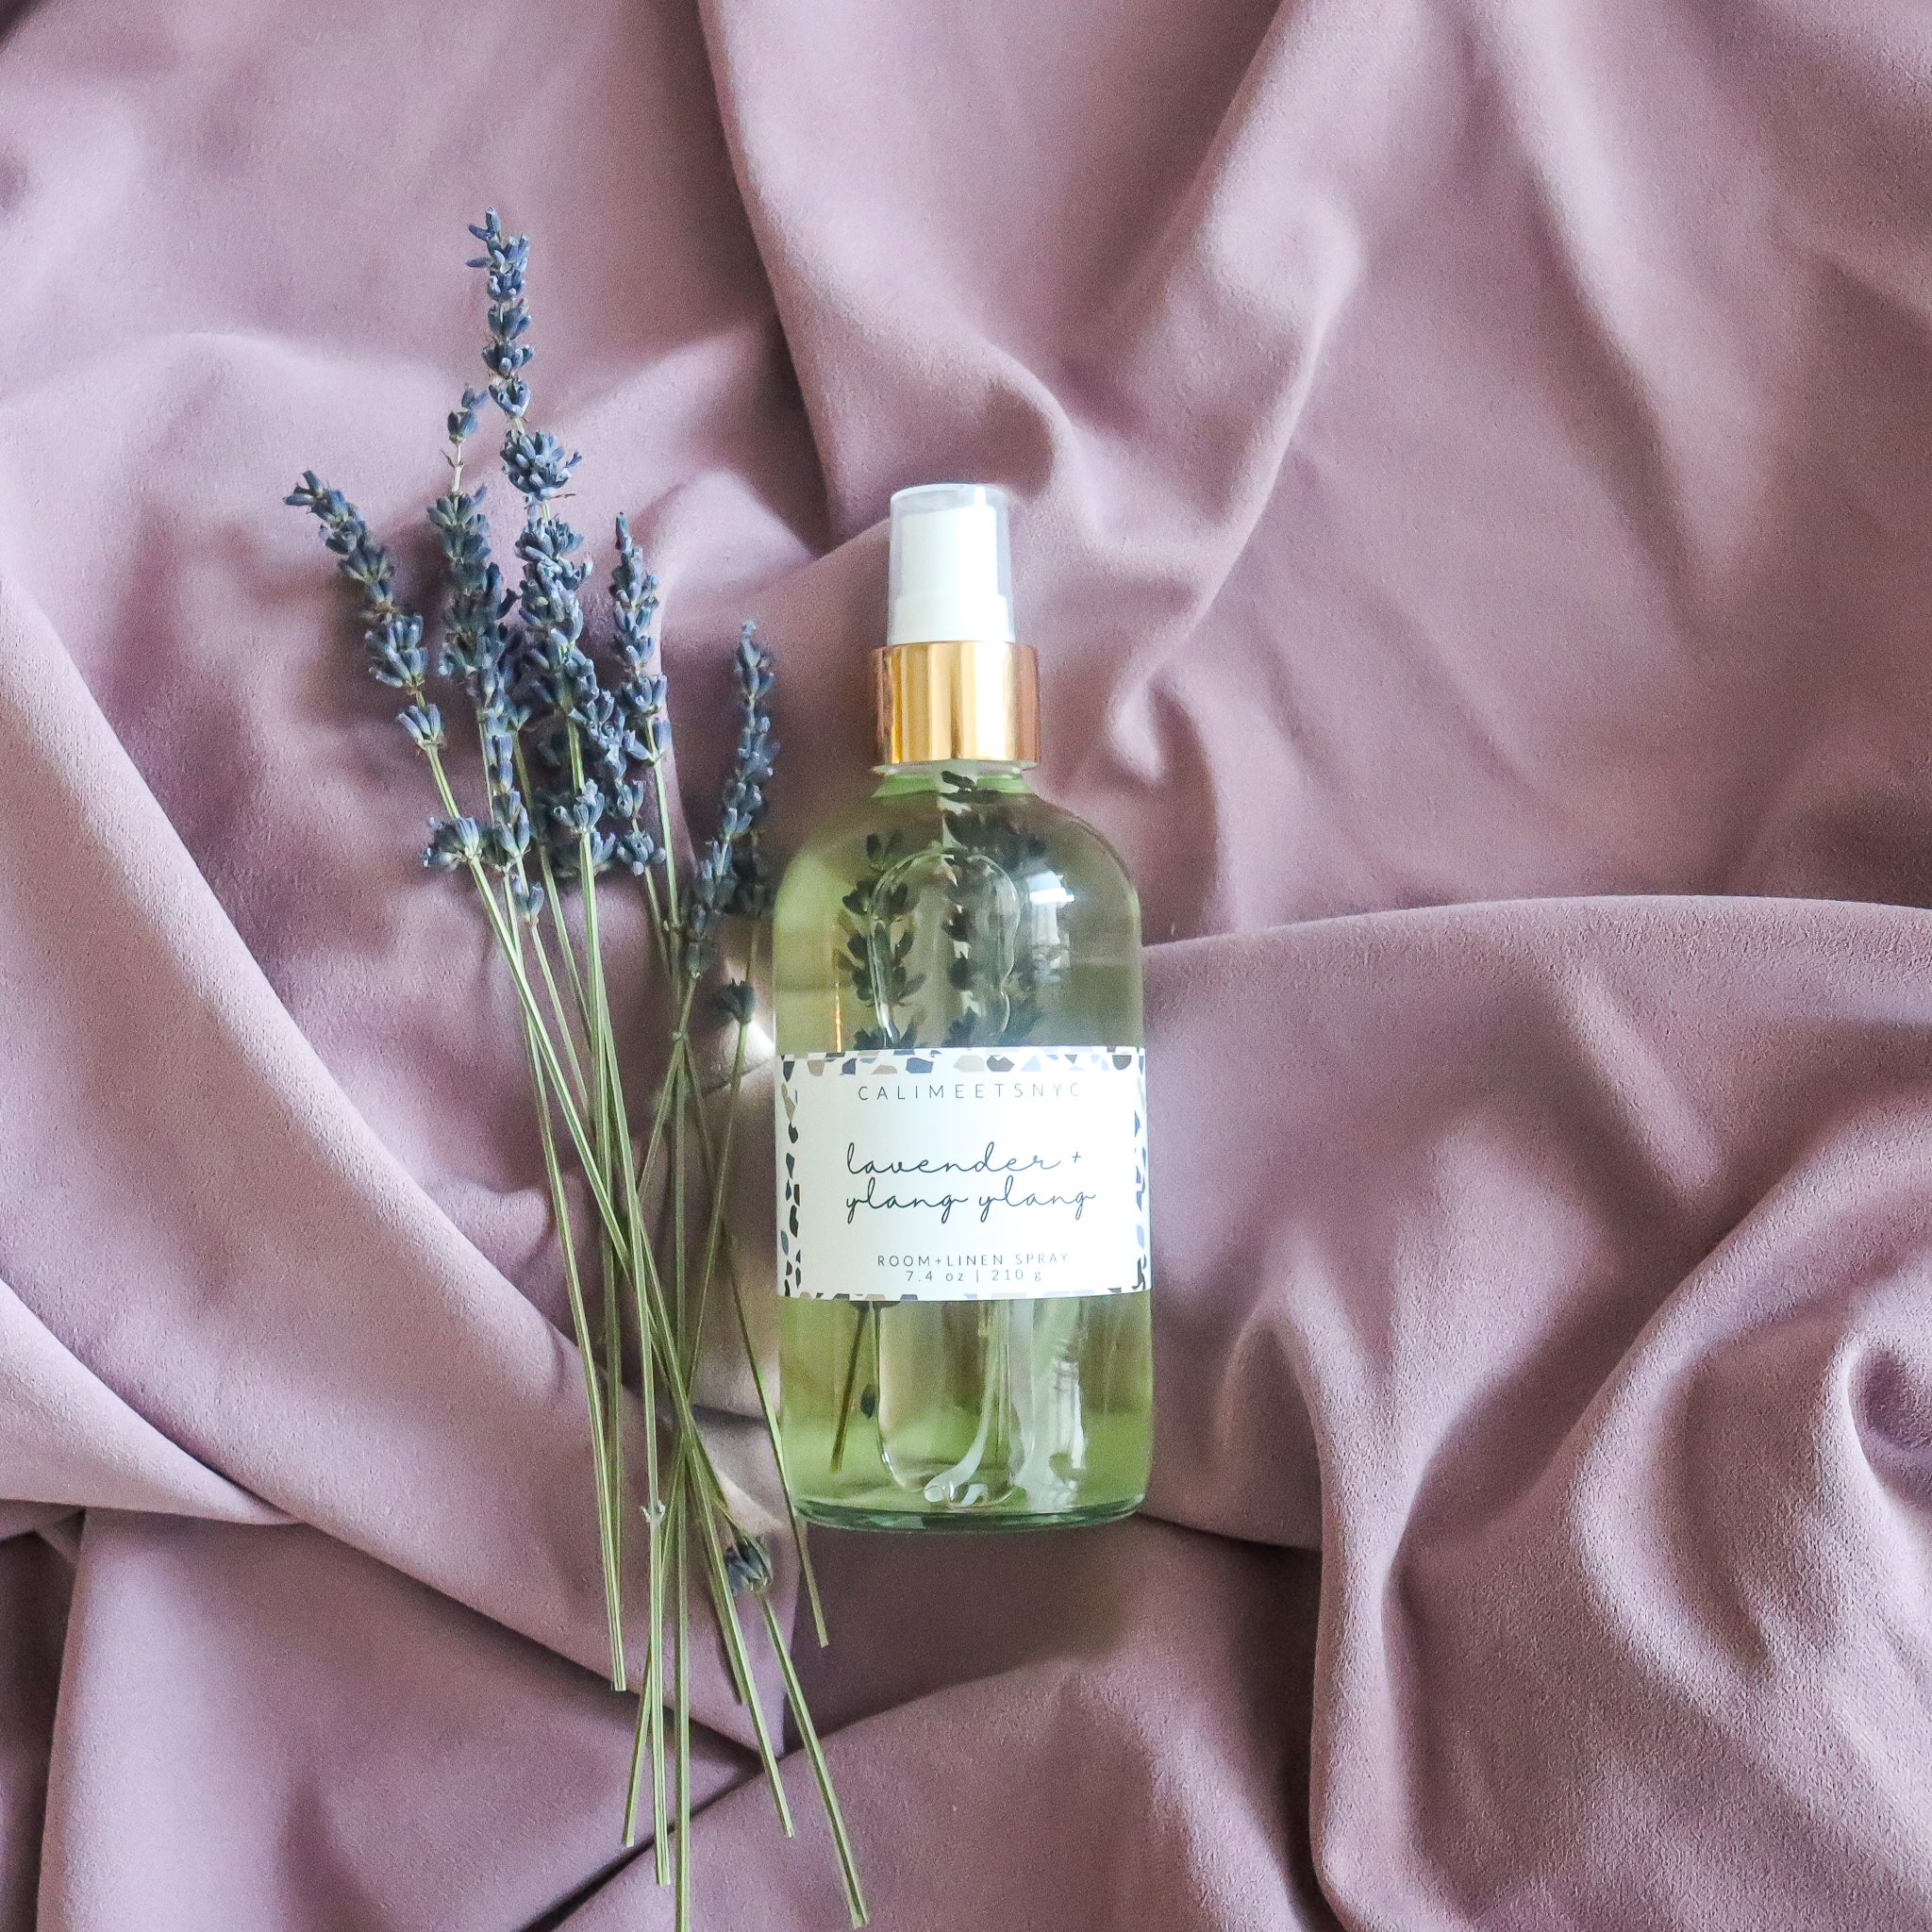 Lavender + Ylang Ylang Room + Linen Spray